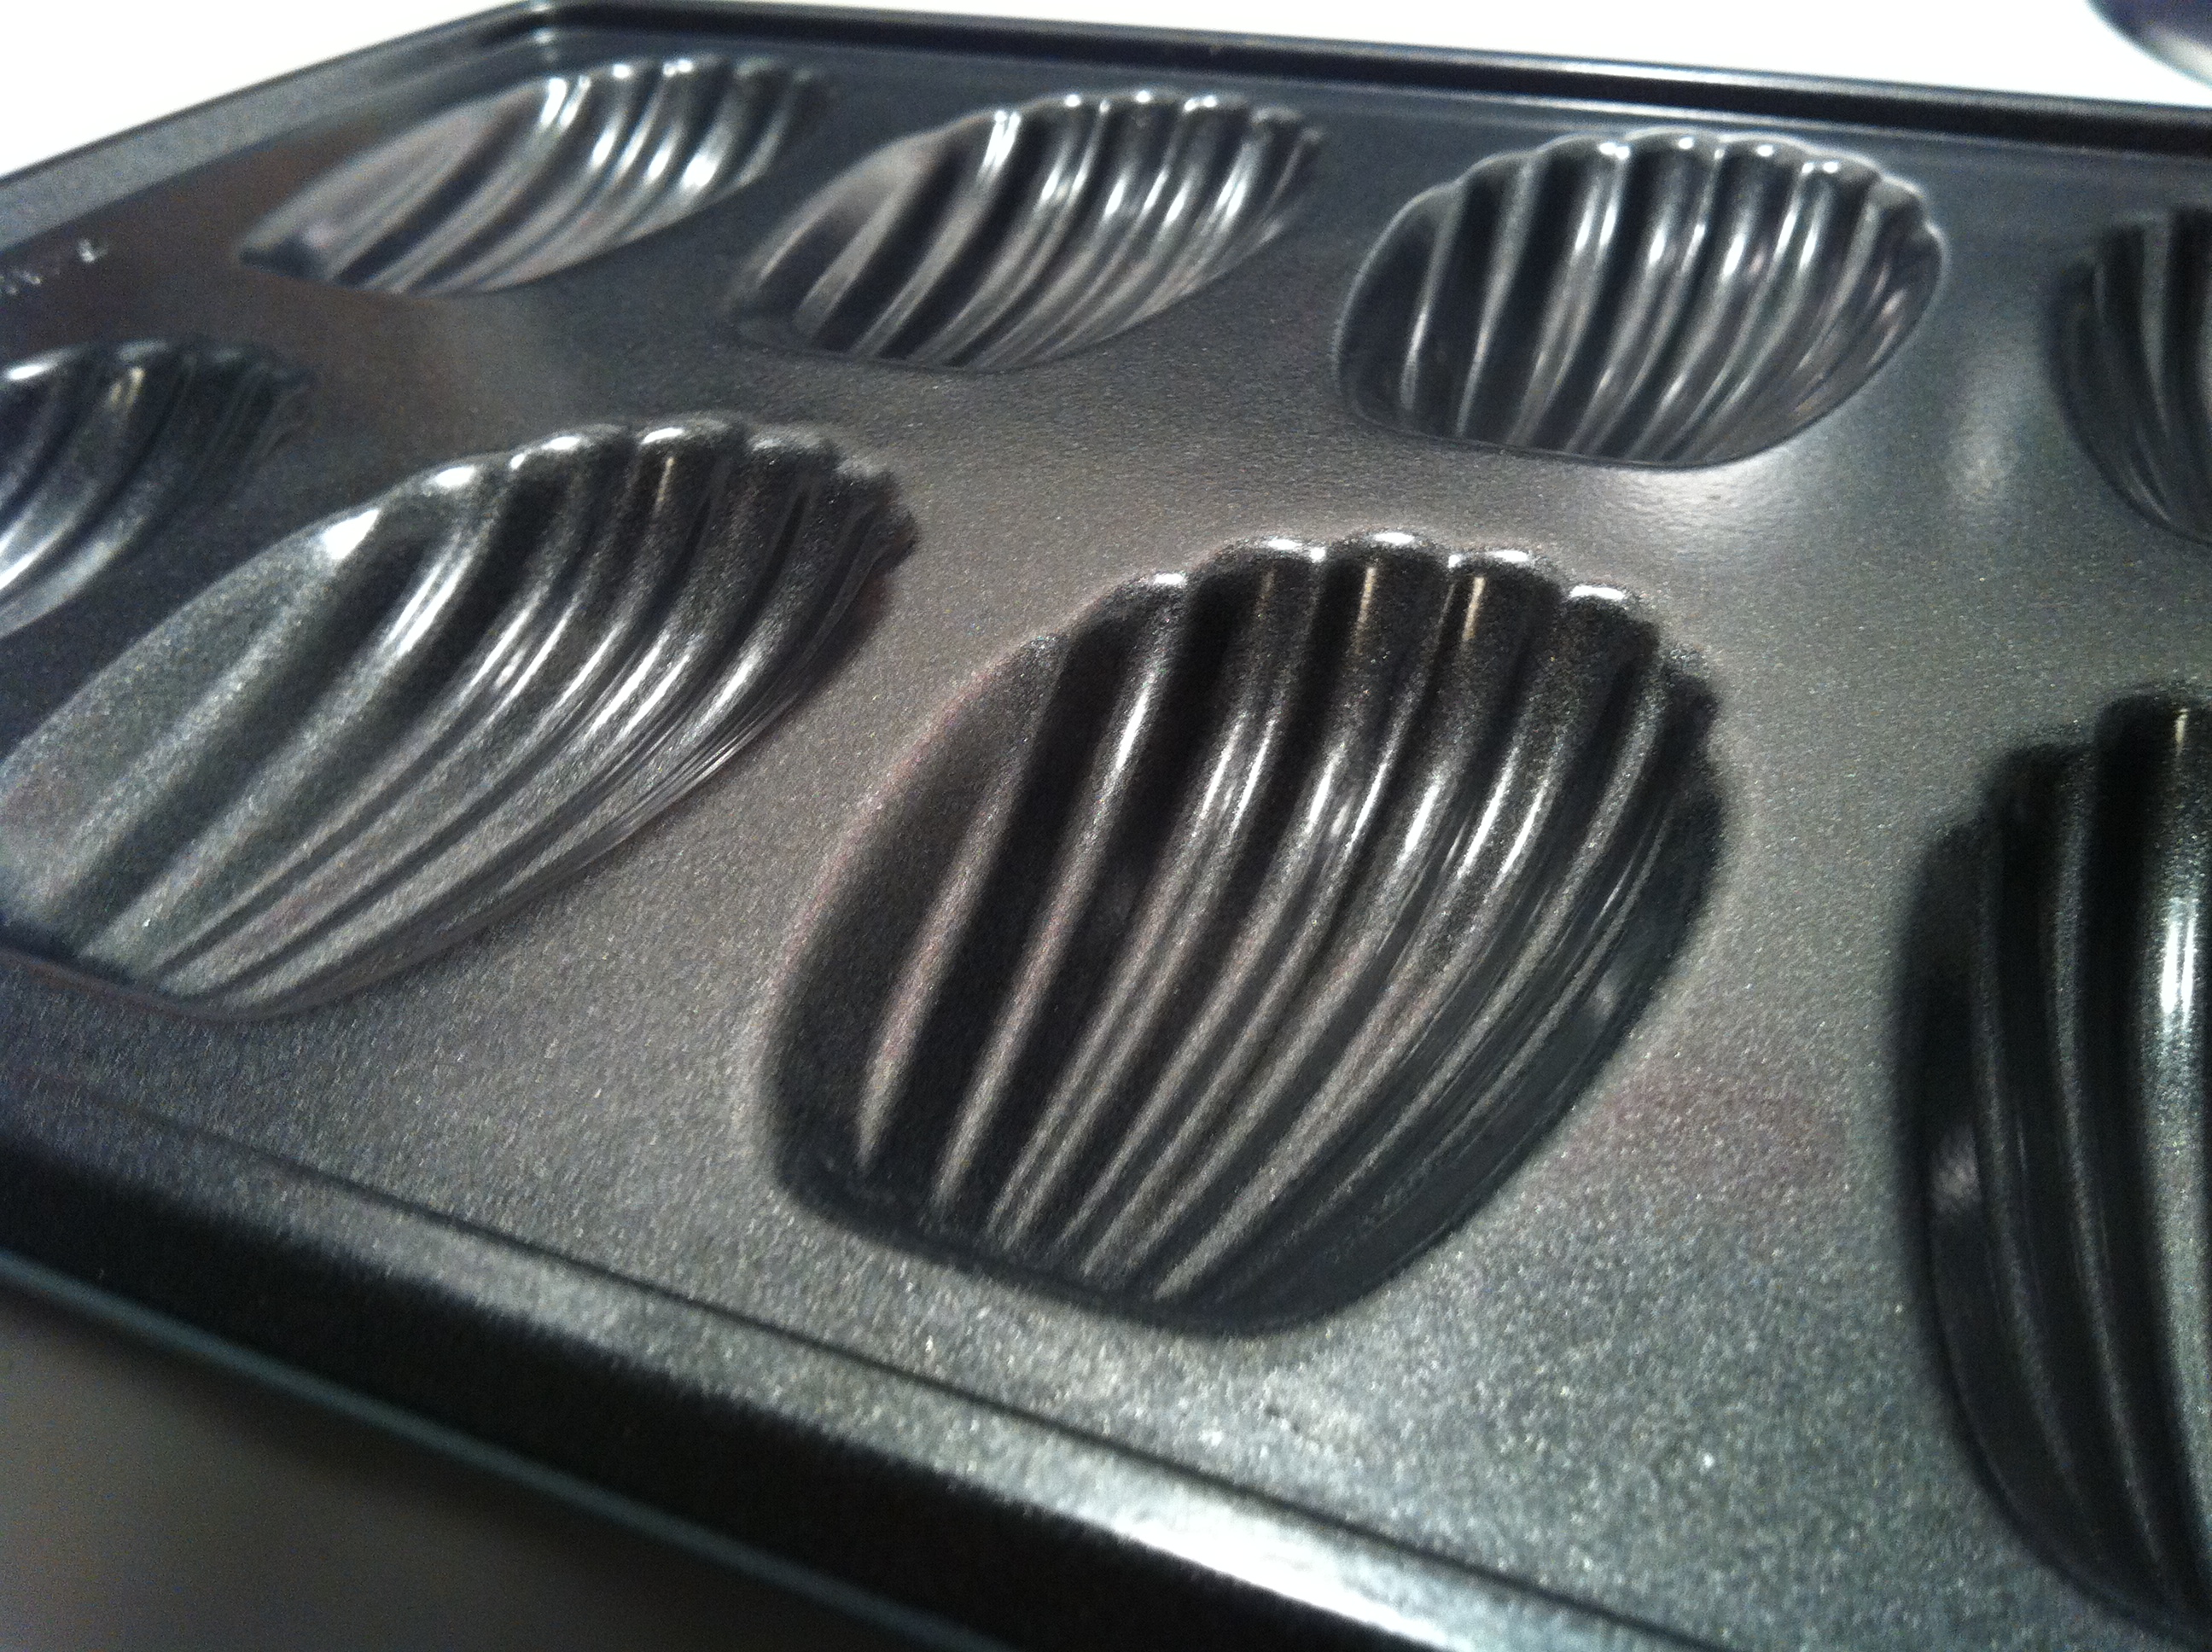 Madeleine mold pan